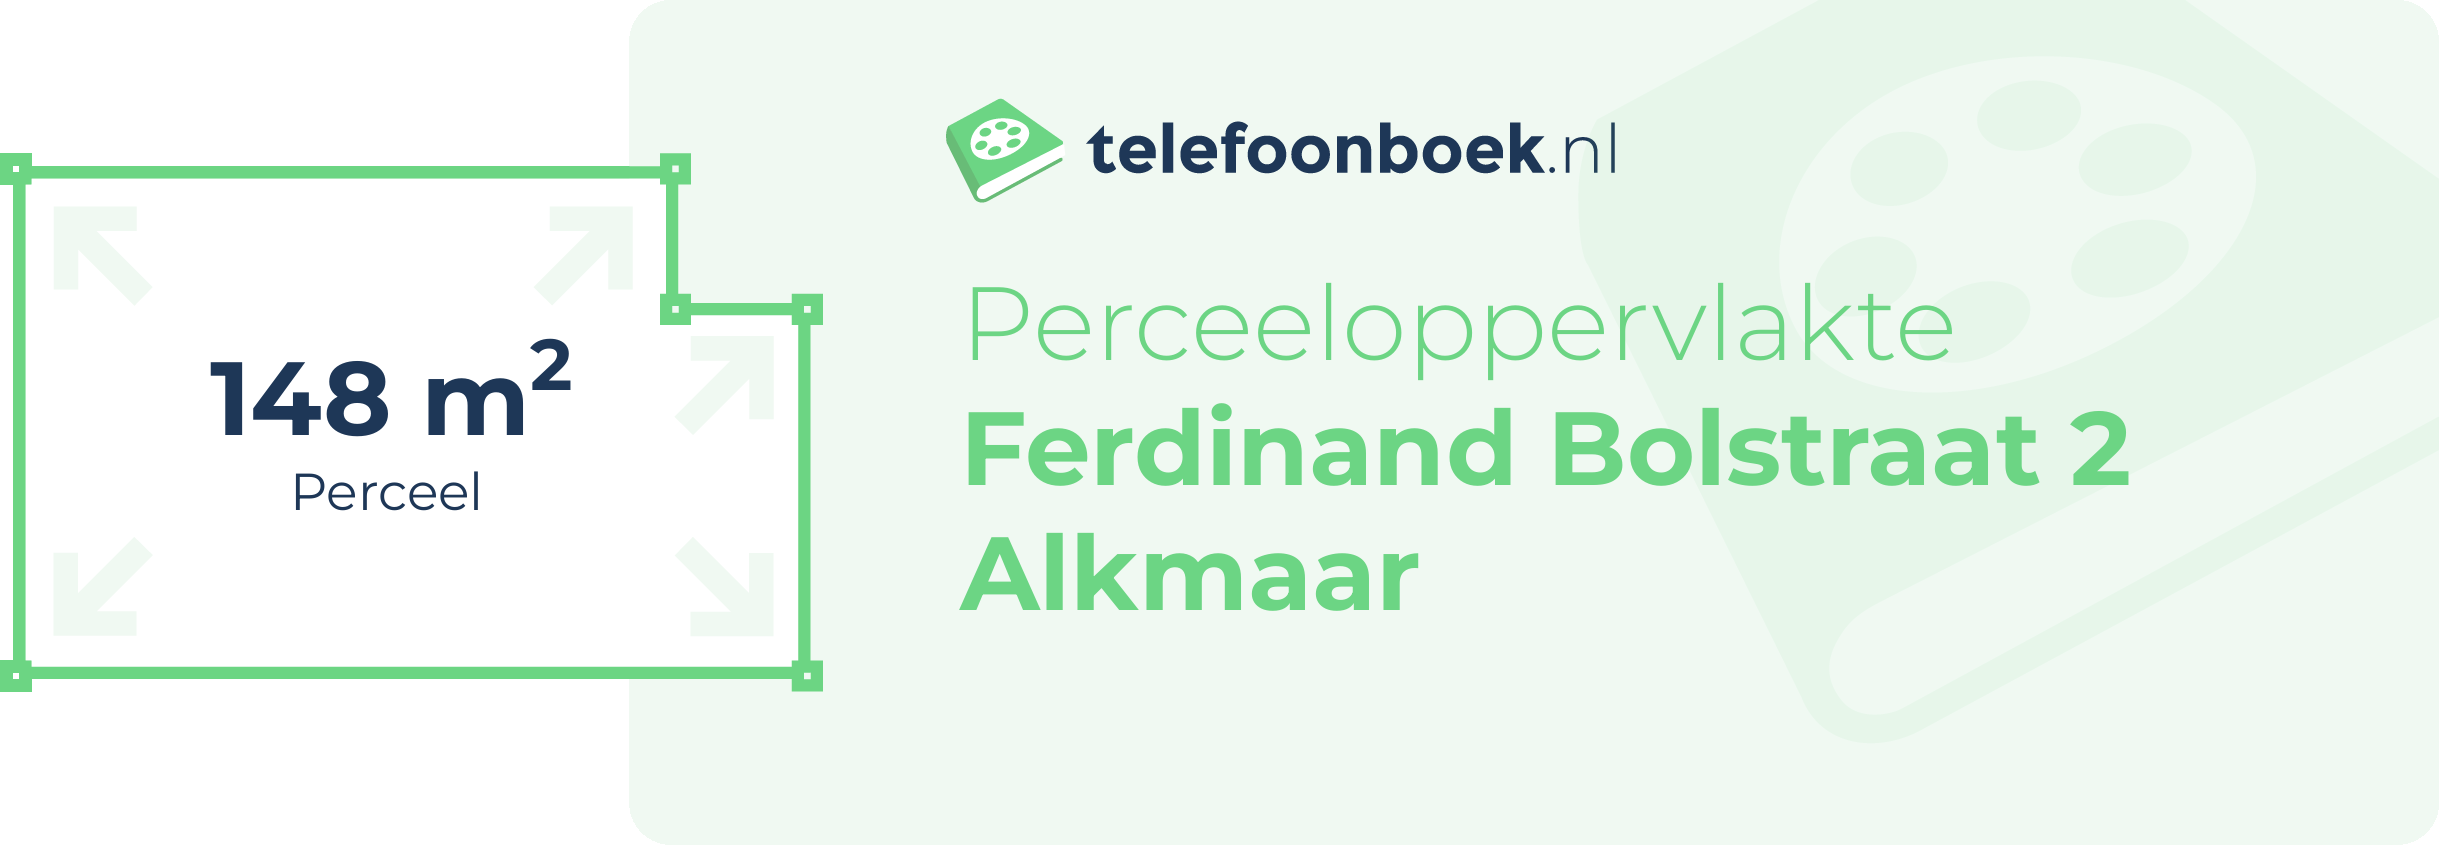 Perceeloppervlakte Ferdinand Bolstraat 2 Alkmaar